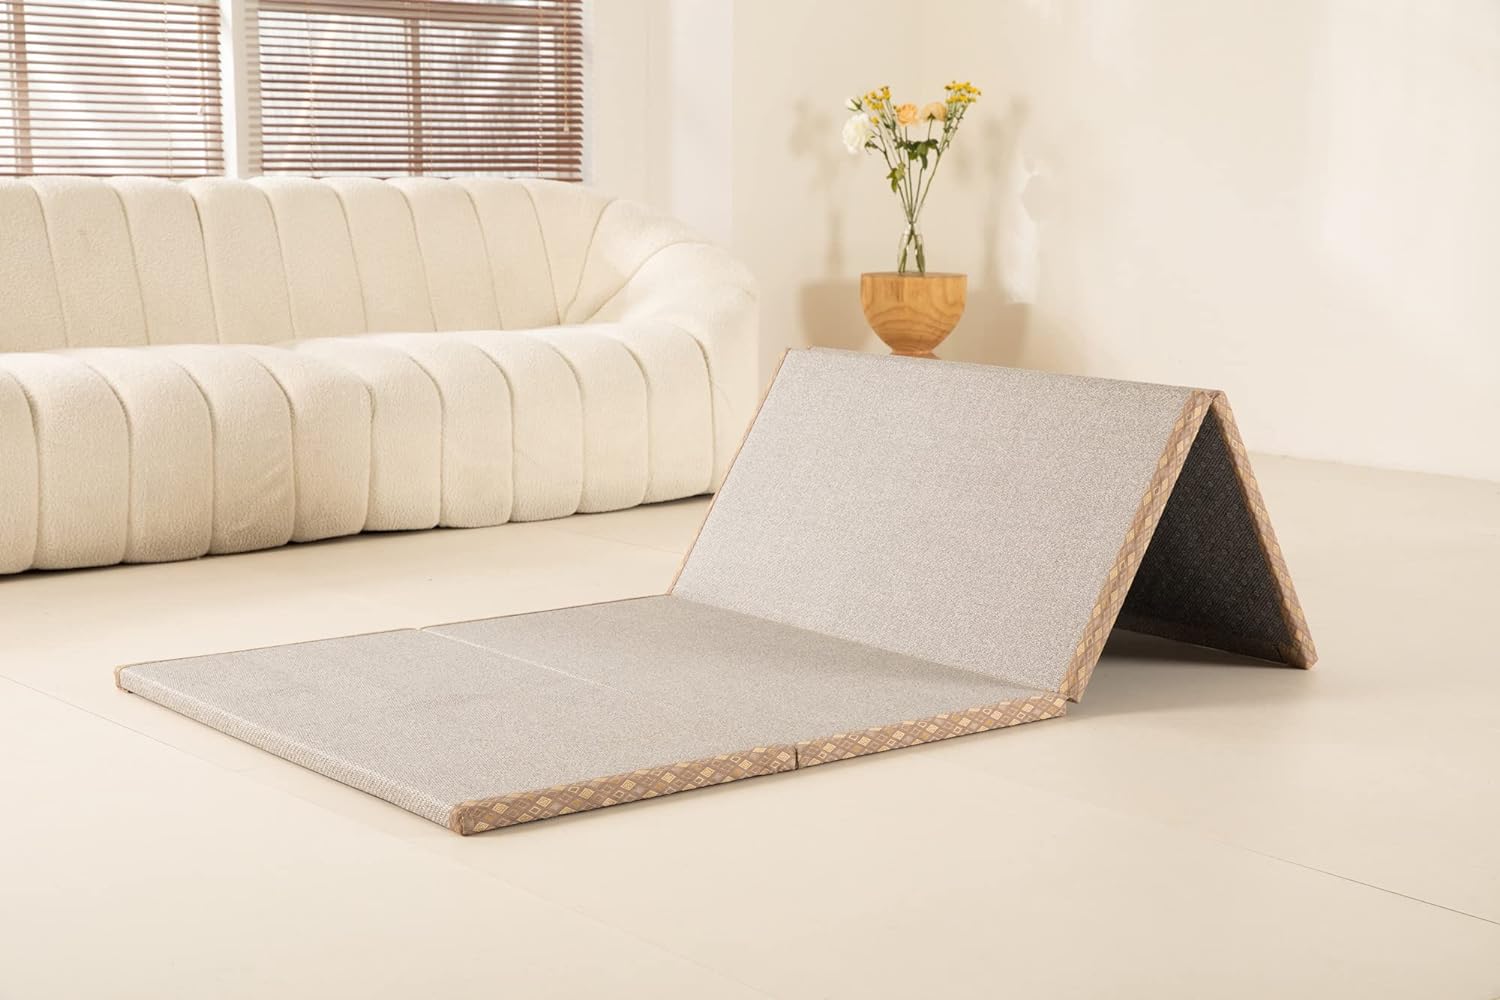 LOVEXTONG Rattan Tatami Mat tradicional japonés piso futón